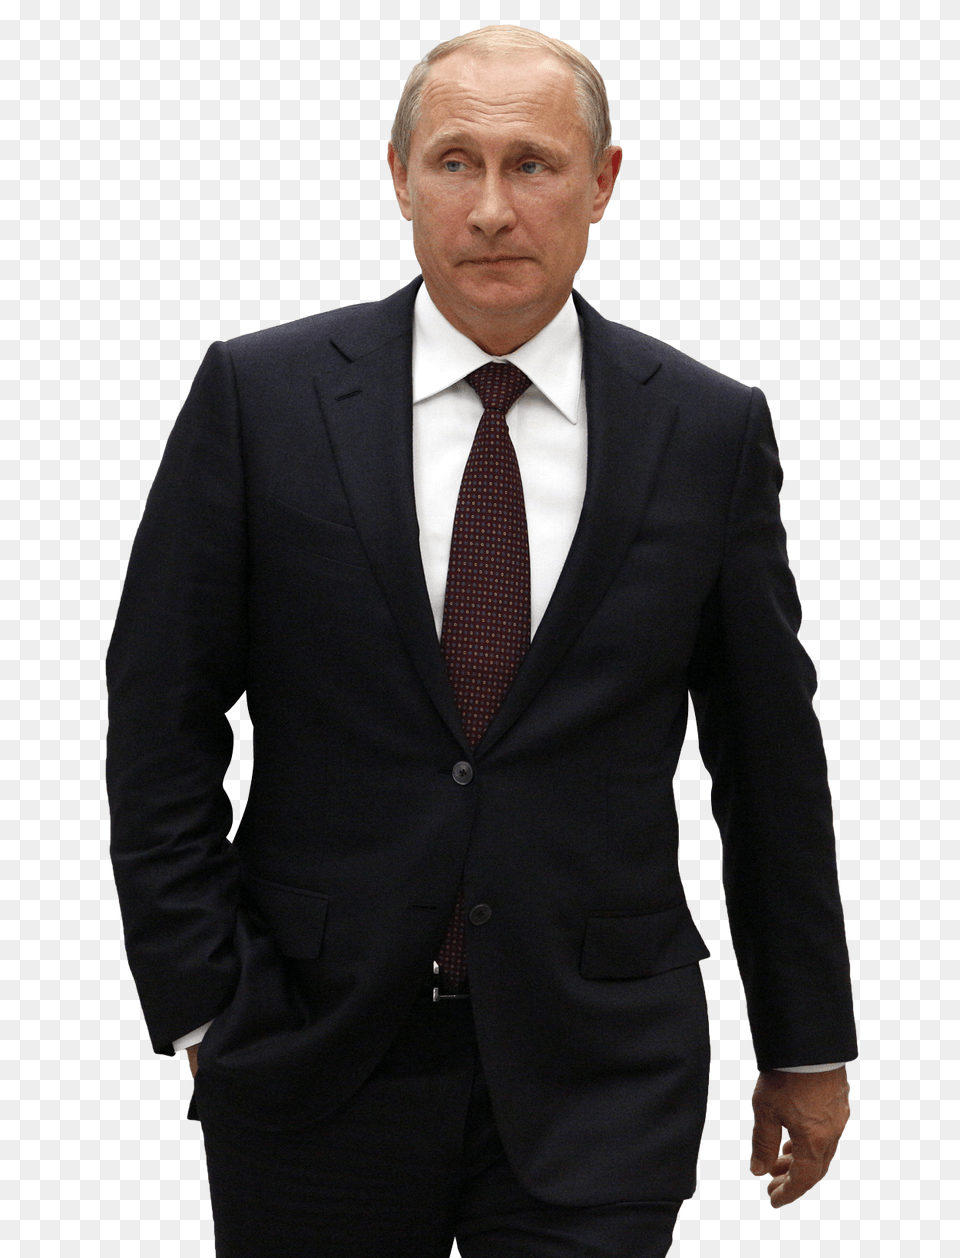 Pngpix Com Vladimir Putin Transparent Accessories, Suit, Jacket, Tie Png Image